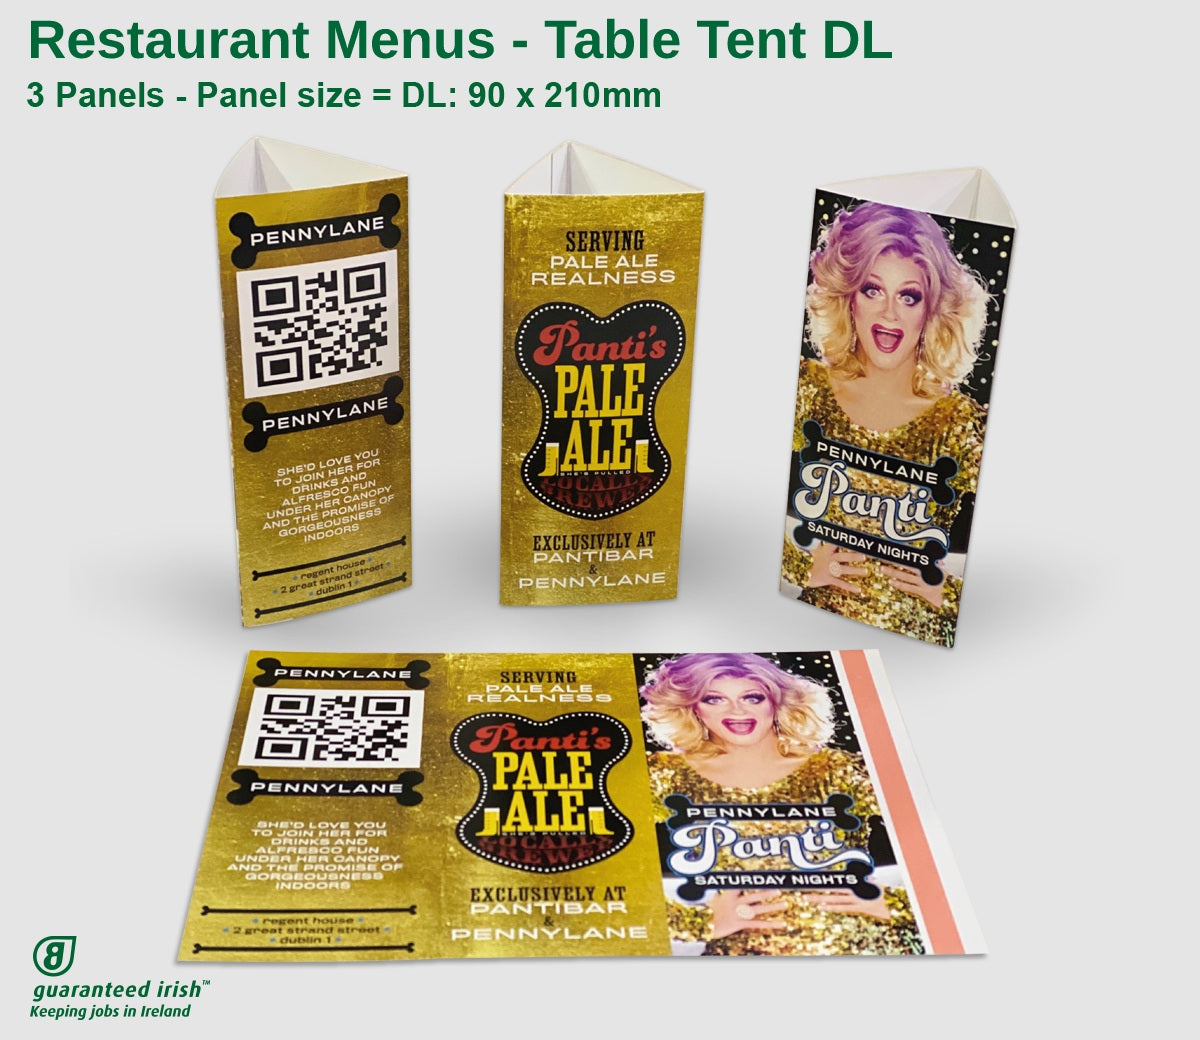 Restaurant Menus - Table Tent DL